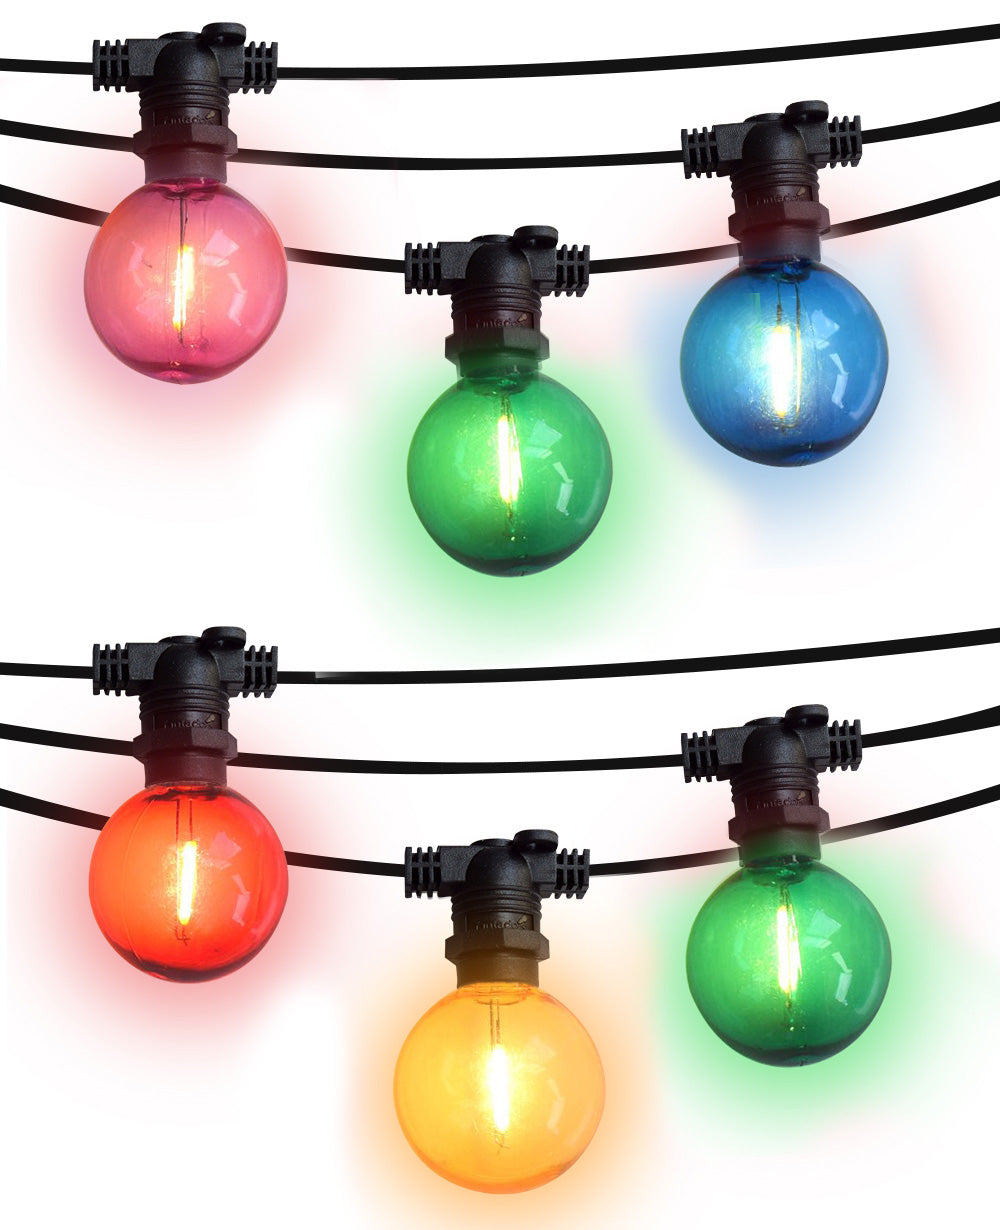 25 Socket Multi-Color Outdoor Commercial String Light Set, 29 FT Black Cord w/ 1-Watt Shatterproof LED Bulbs, Weatherproof